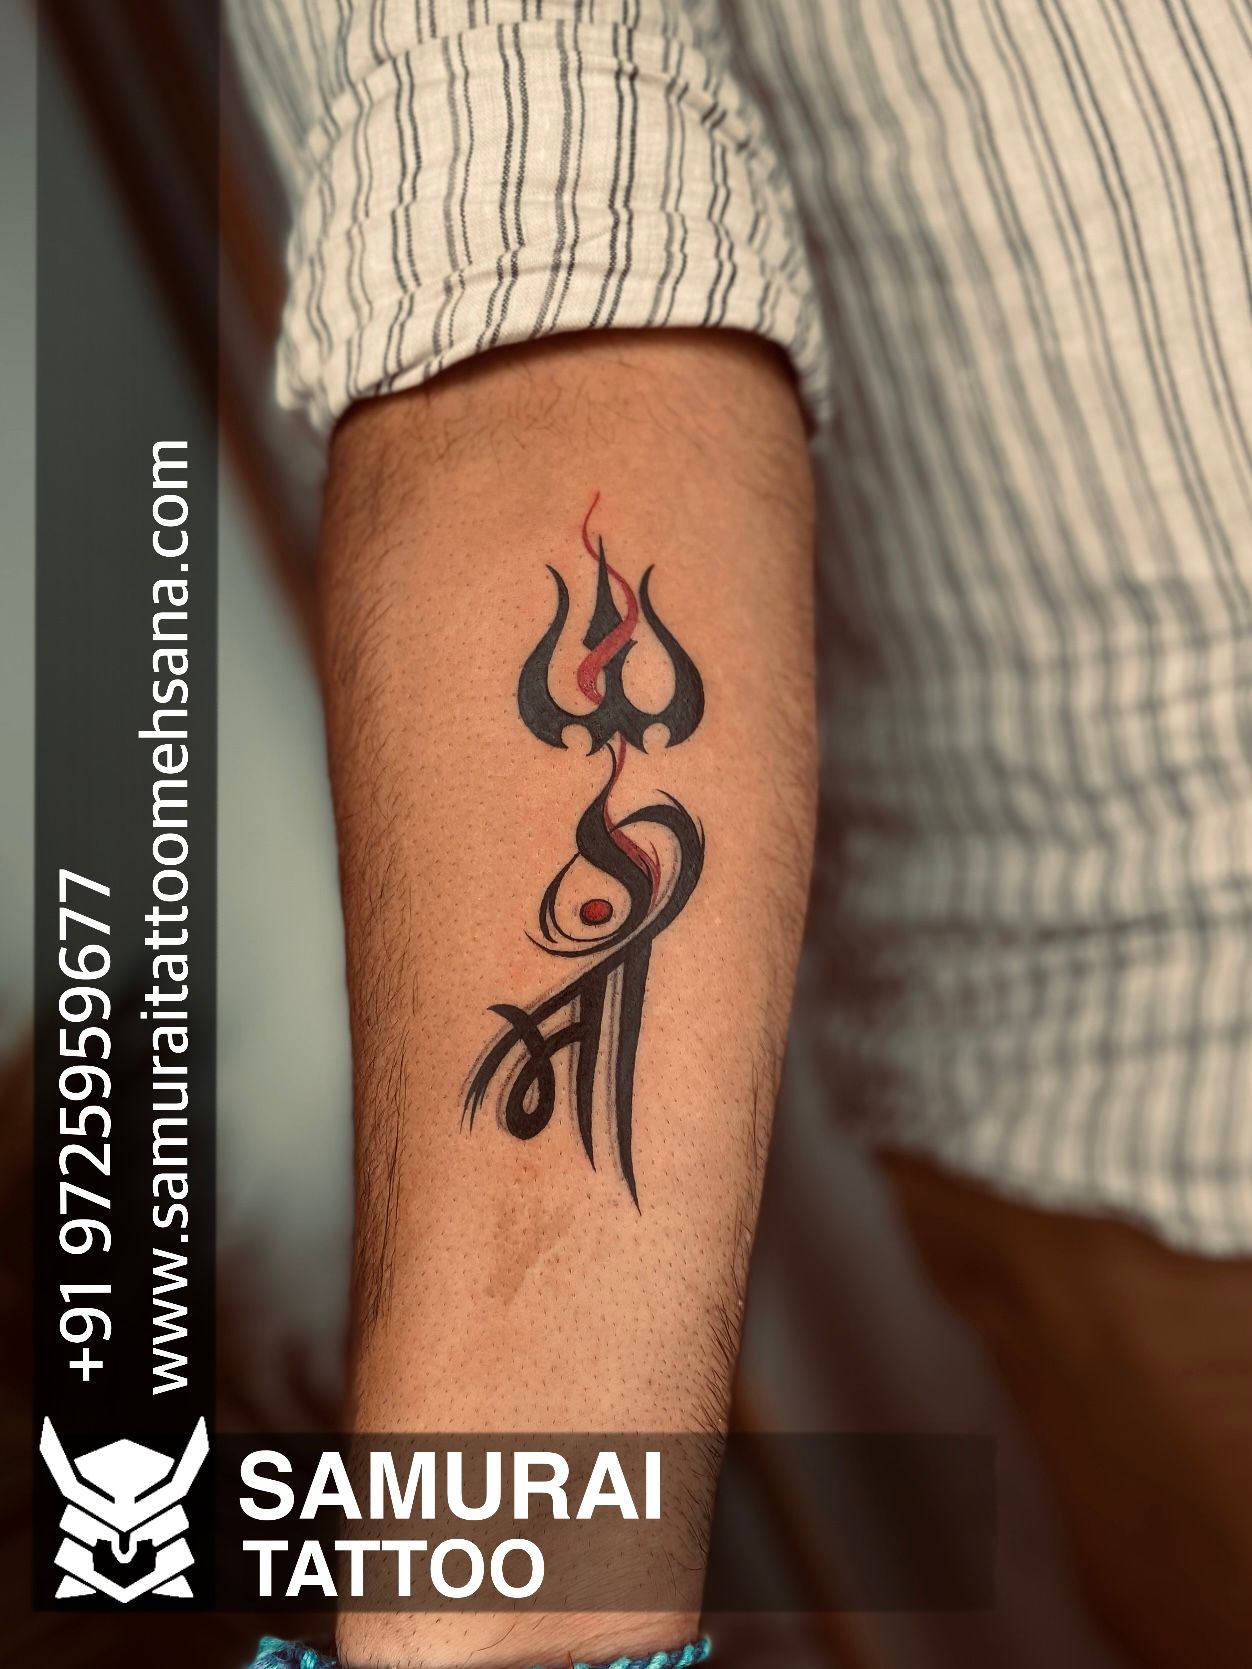 Crazy Tattoo & Maa Aashapura Tattoo (Closed Down) in Dombivli East,Mumbai -  Best in Mumbai - Justdial